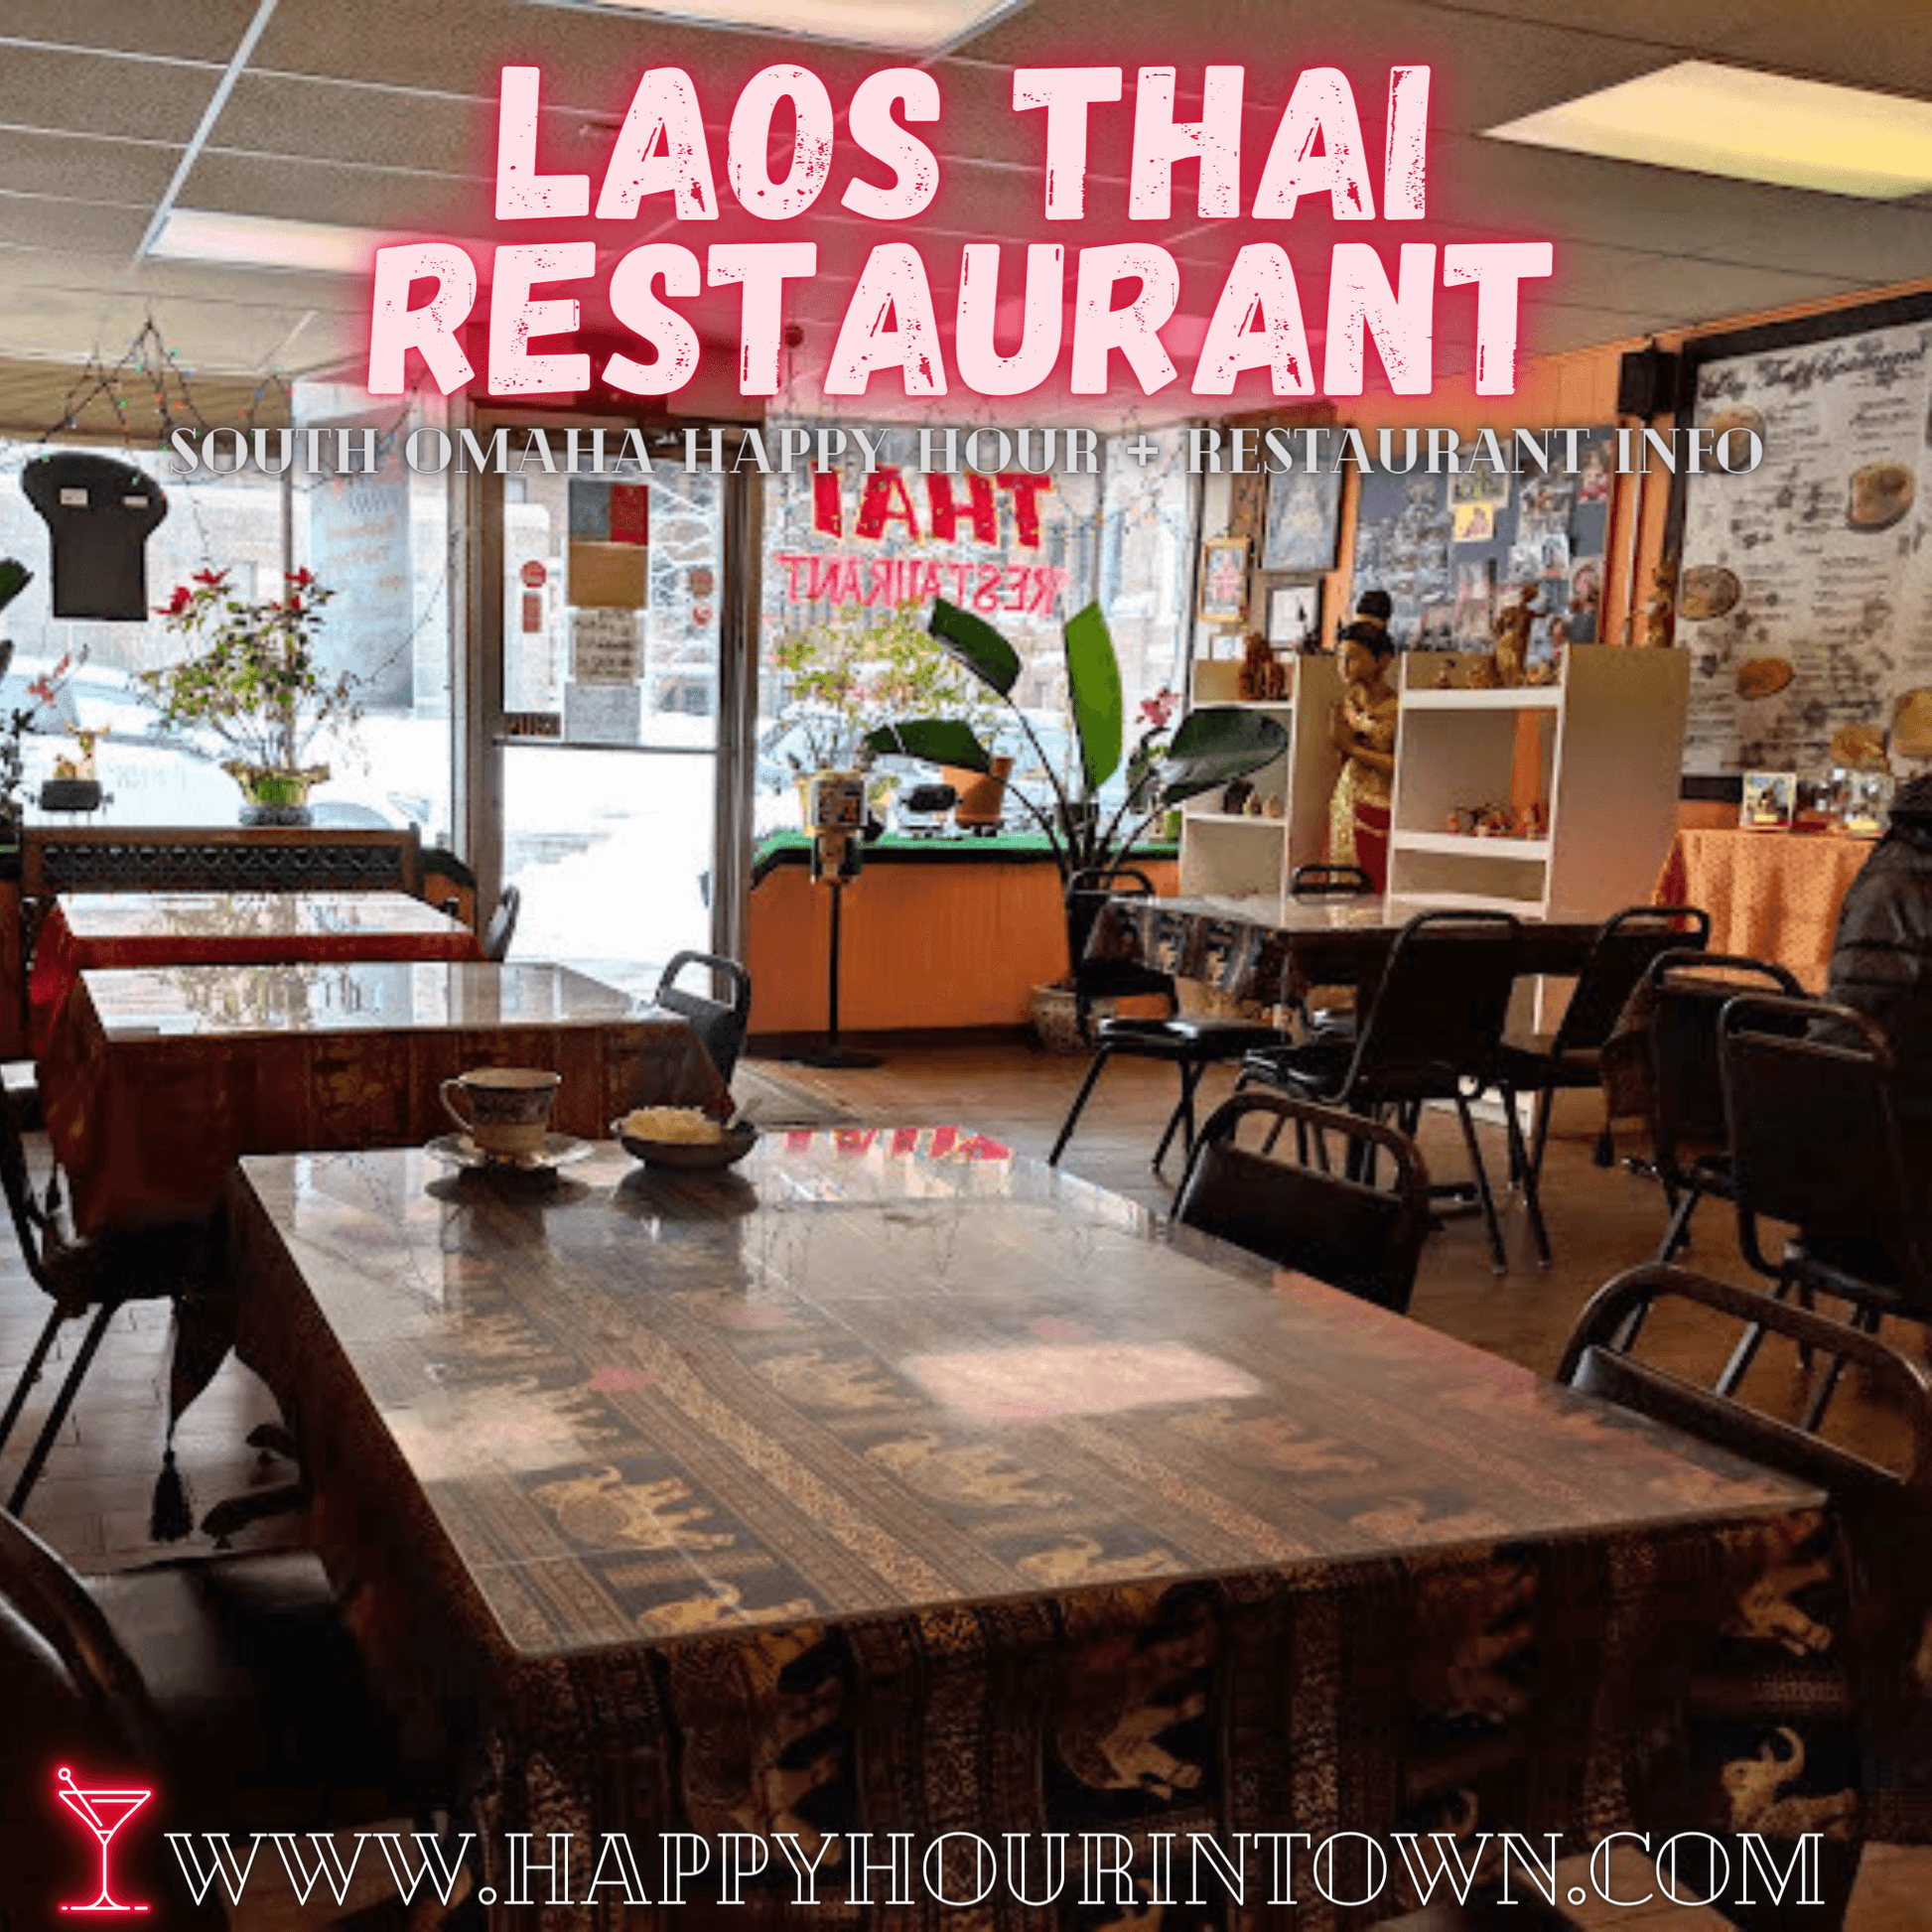 Laos Thai Restaurant Omaha Happy Hour In Town